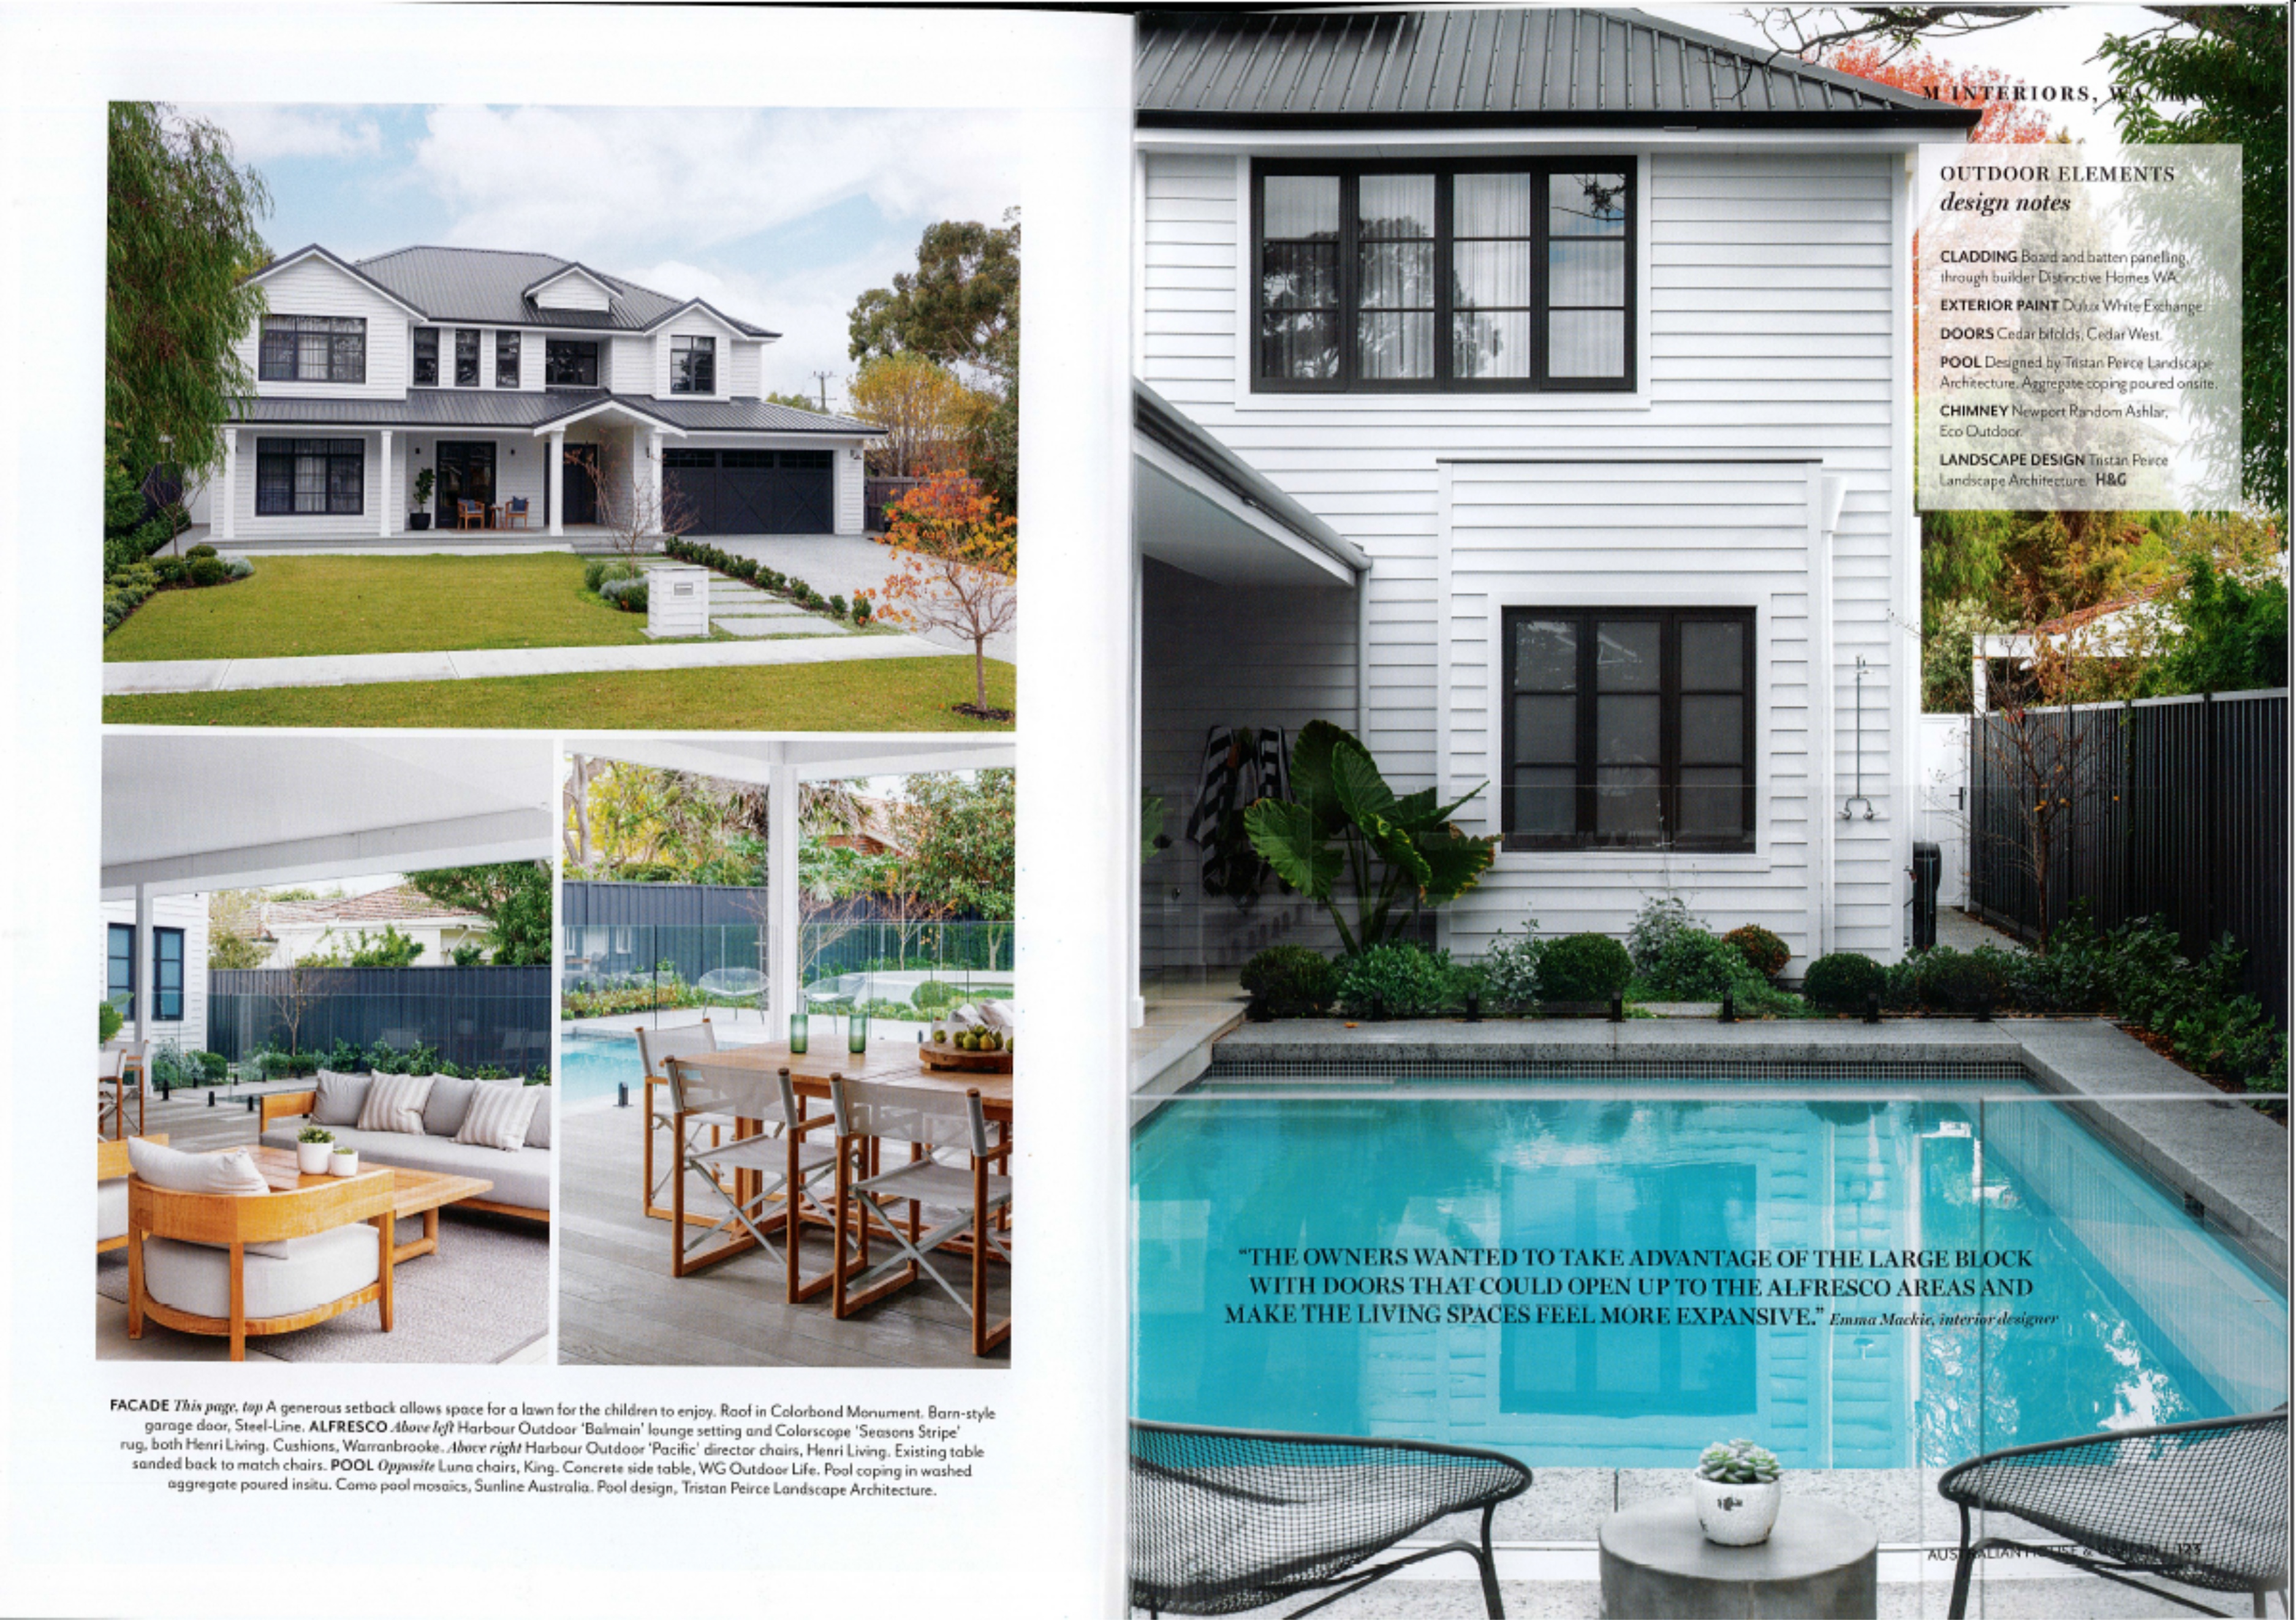 House & Garden Magazine